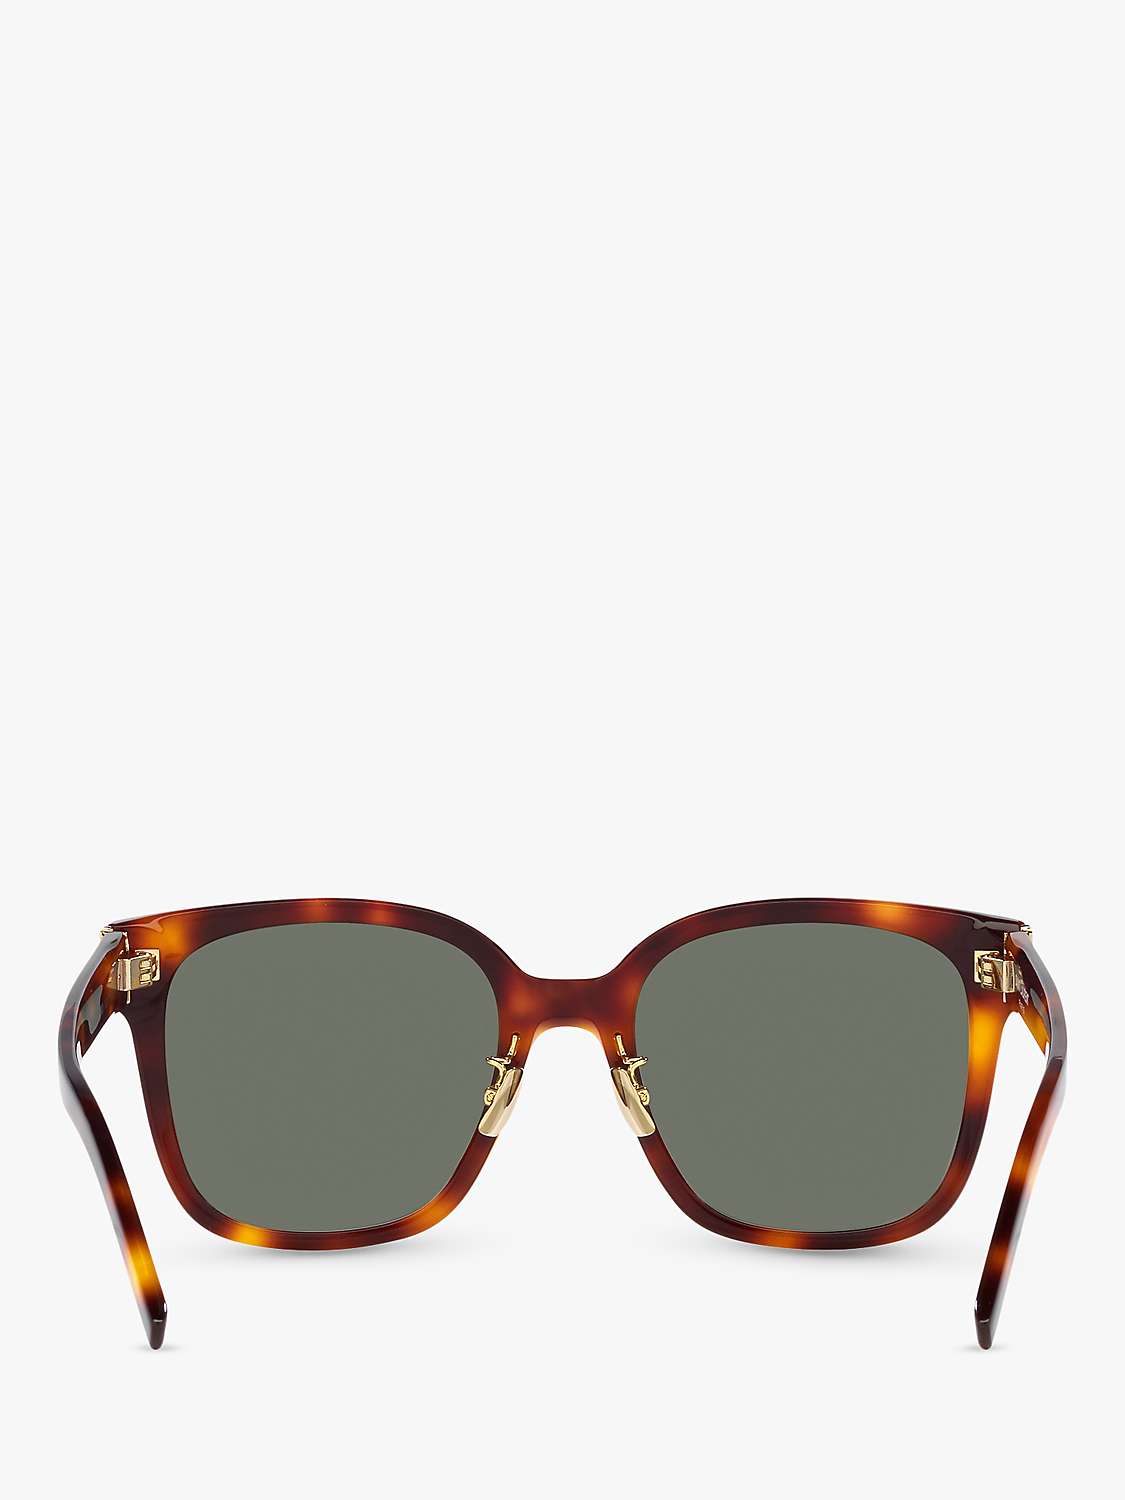 Buy Yves Saint Laurent SL M105 Women's Square Sunglasses, Tortoise/Grey Online at johnlewis.com